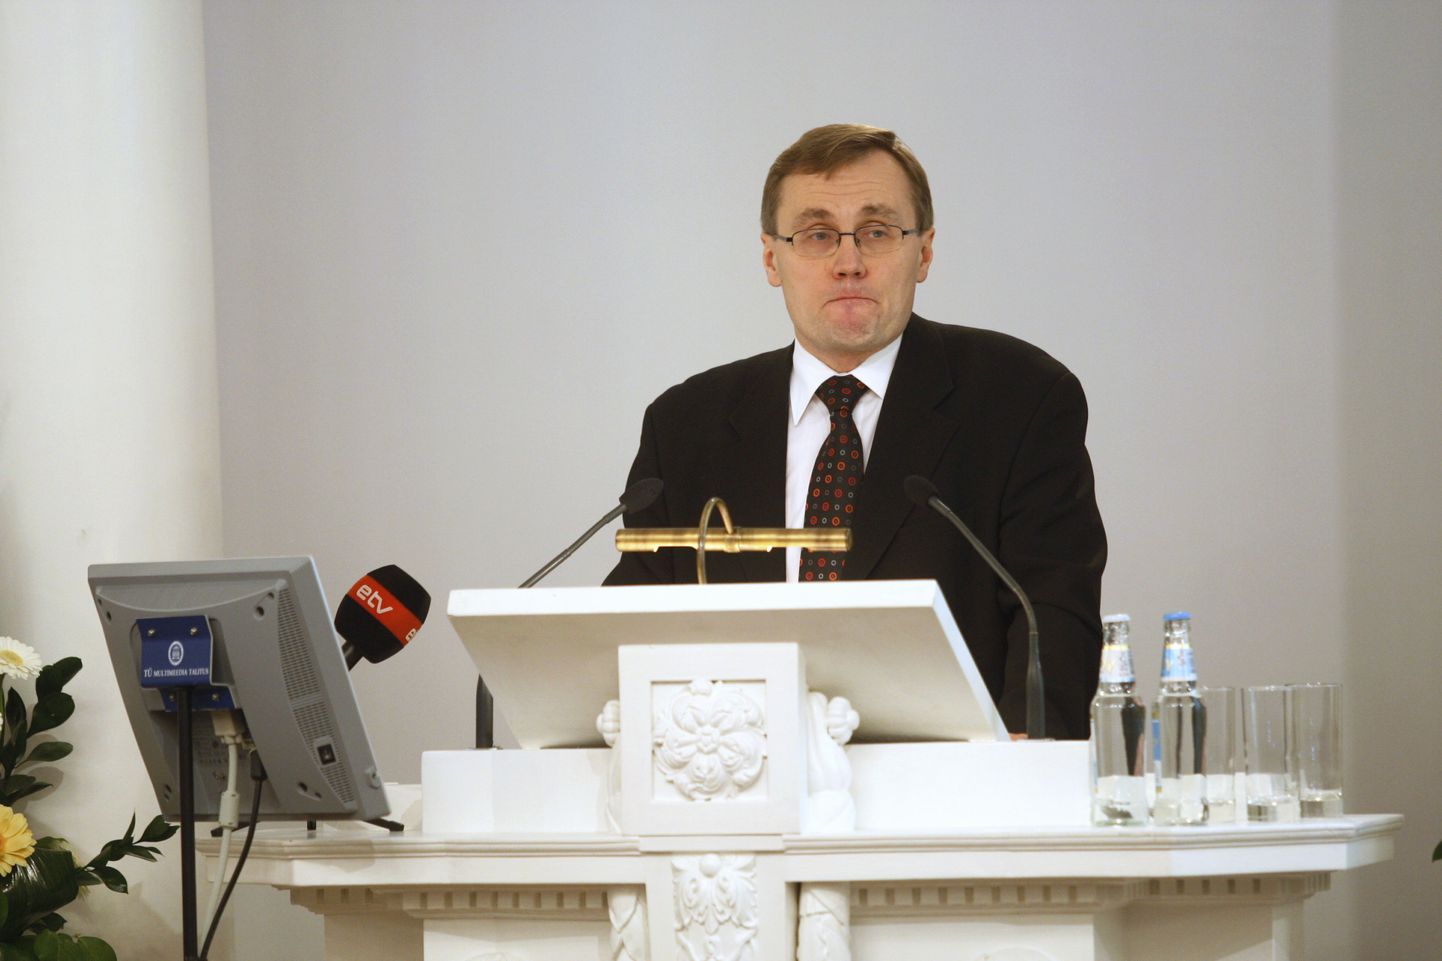 Minister Tõnis Lukas